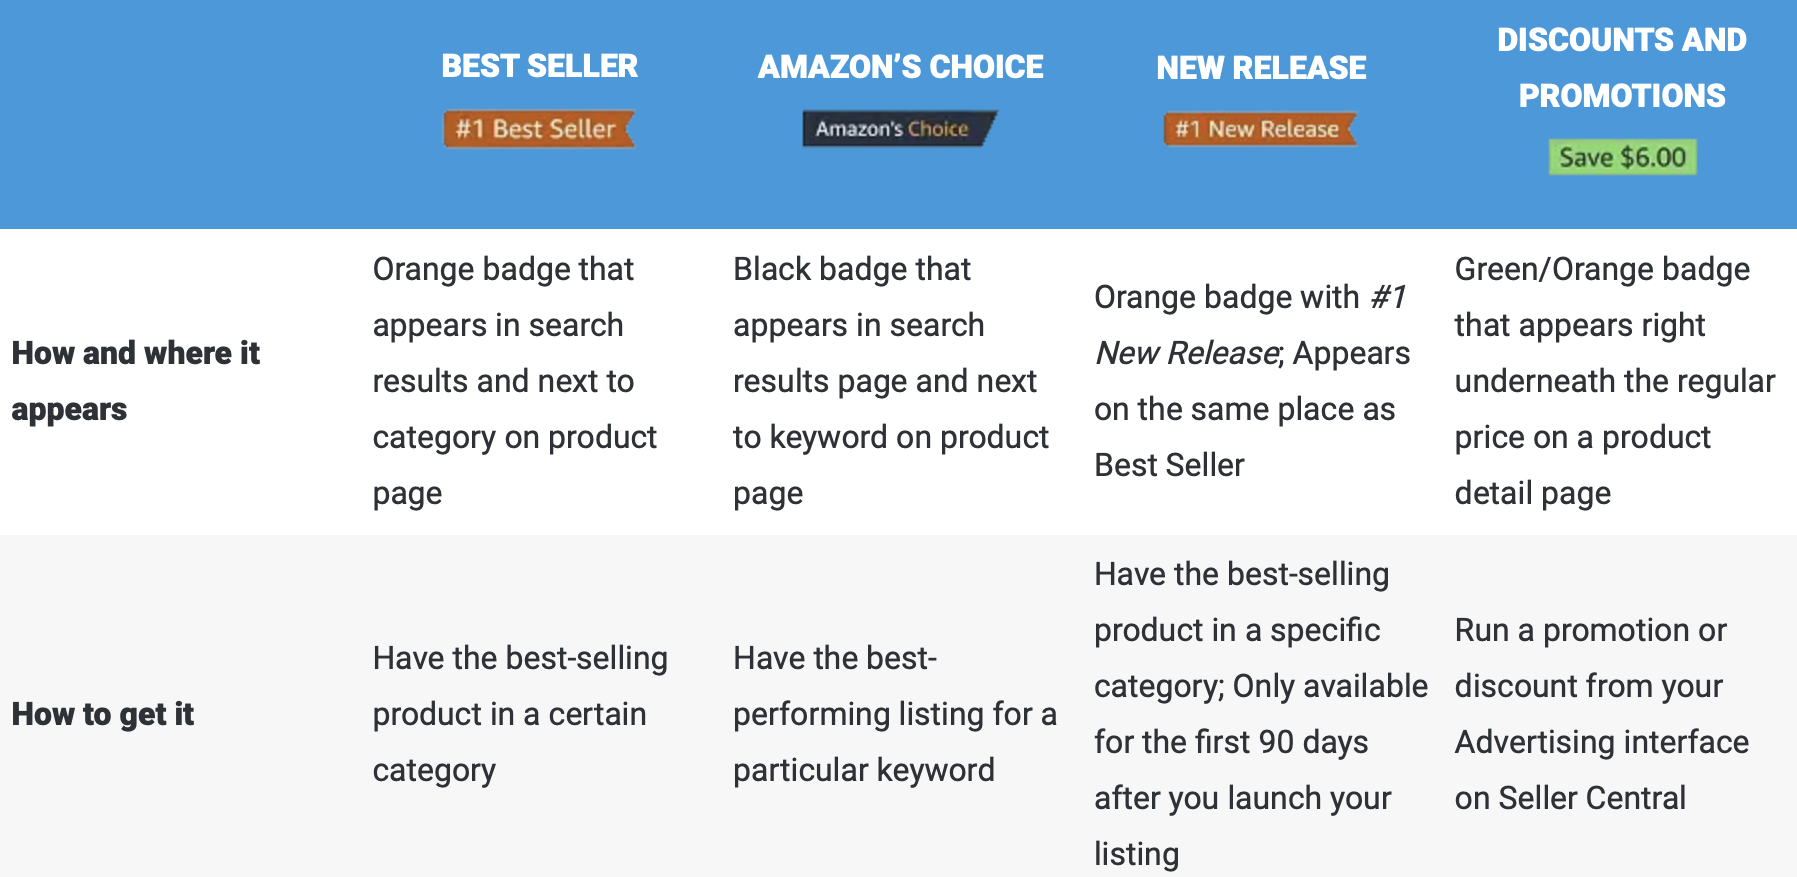 Amazon Badges: Overview